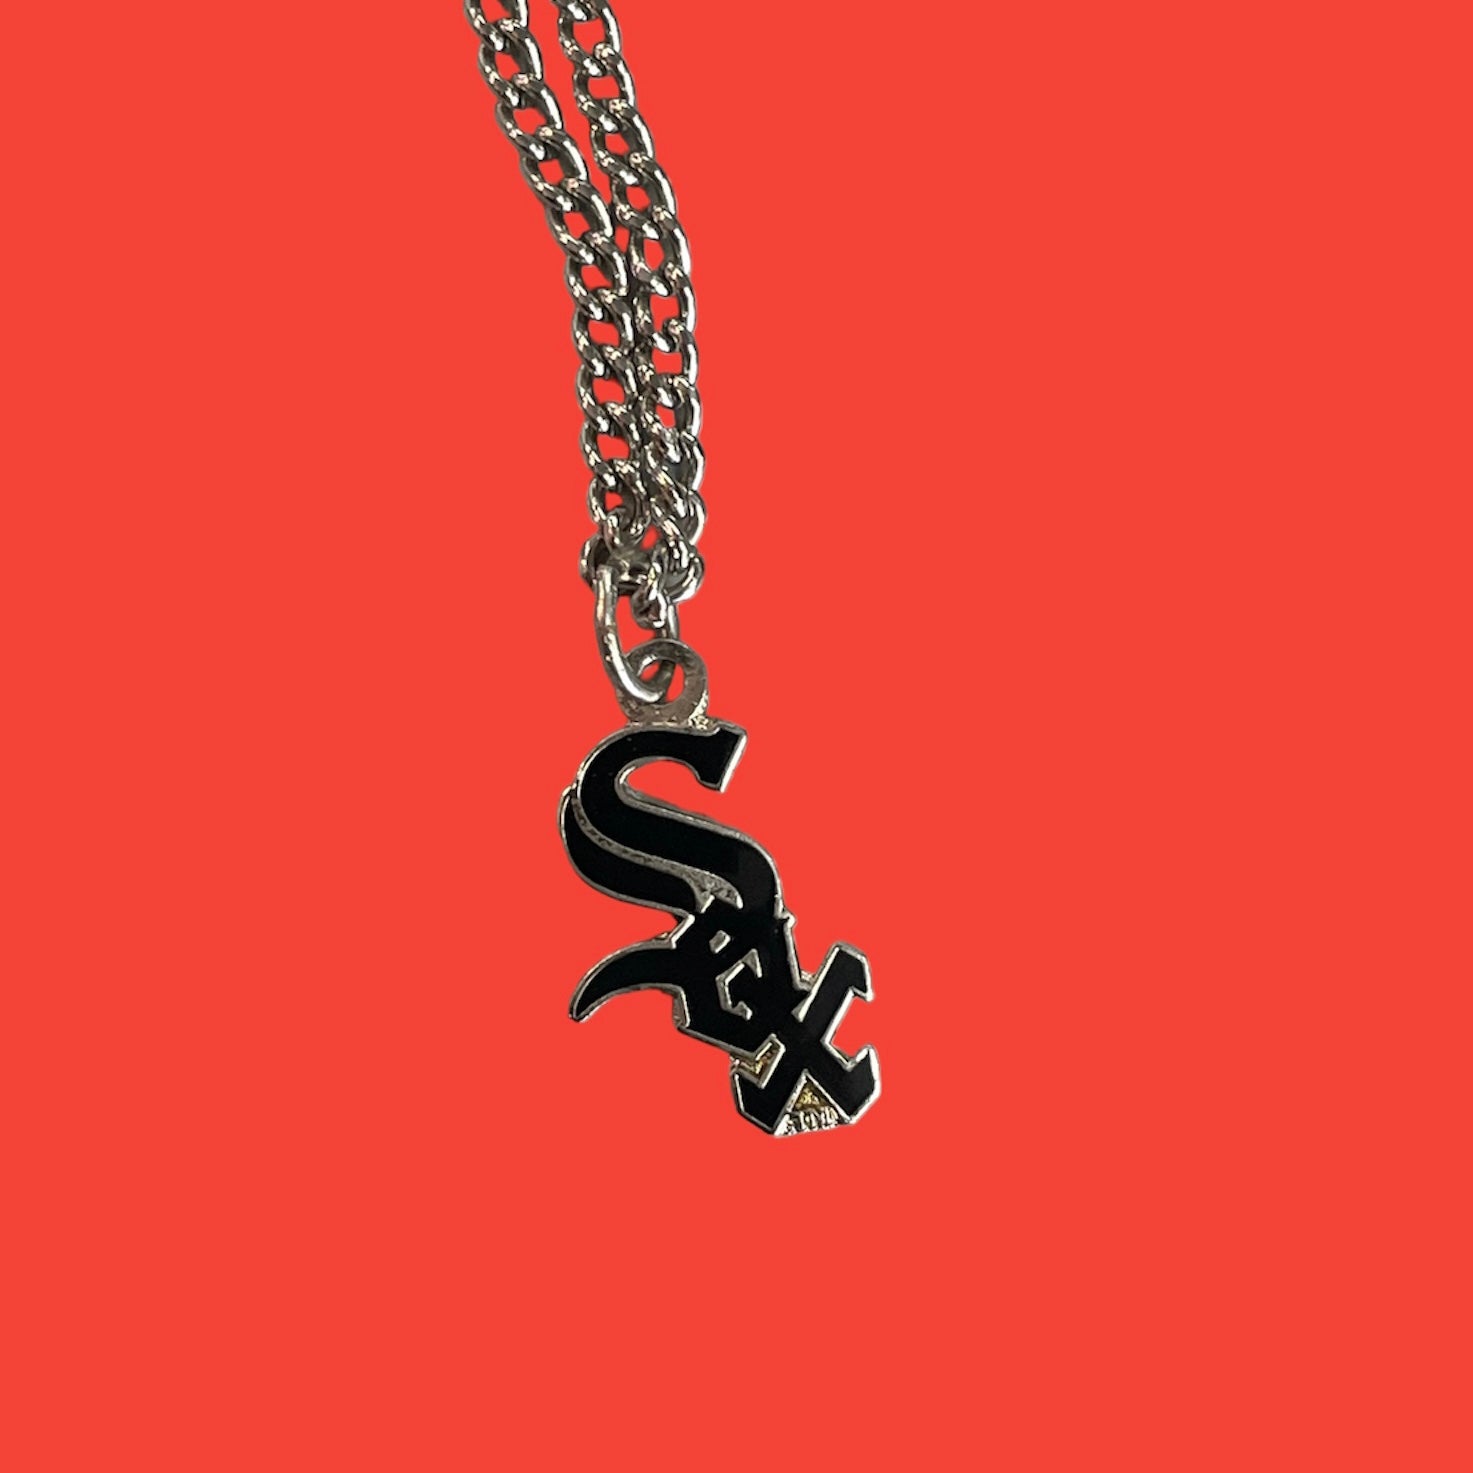 White Sox’s Logo